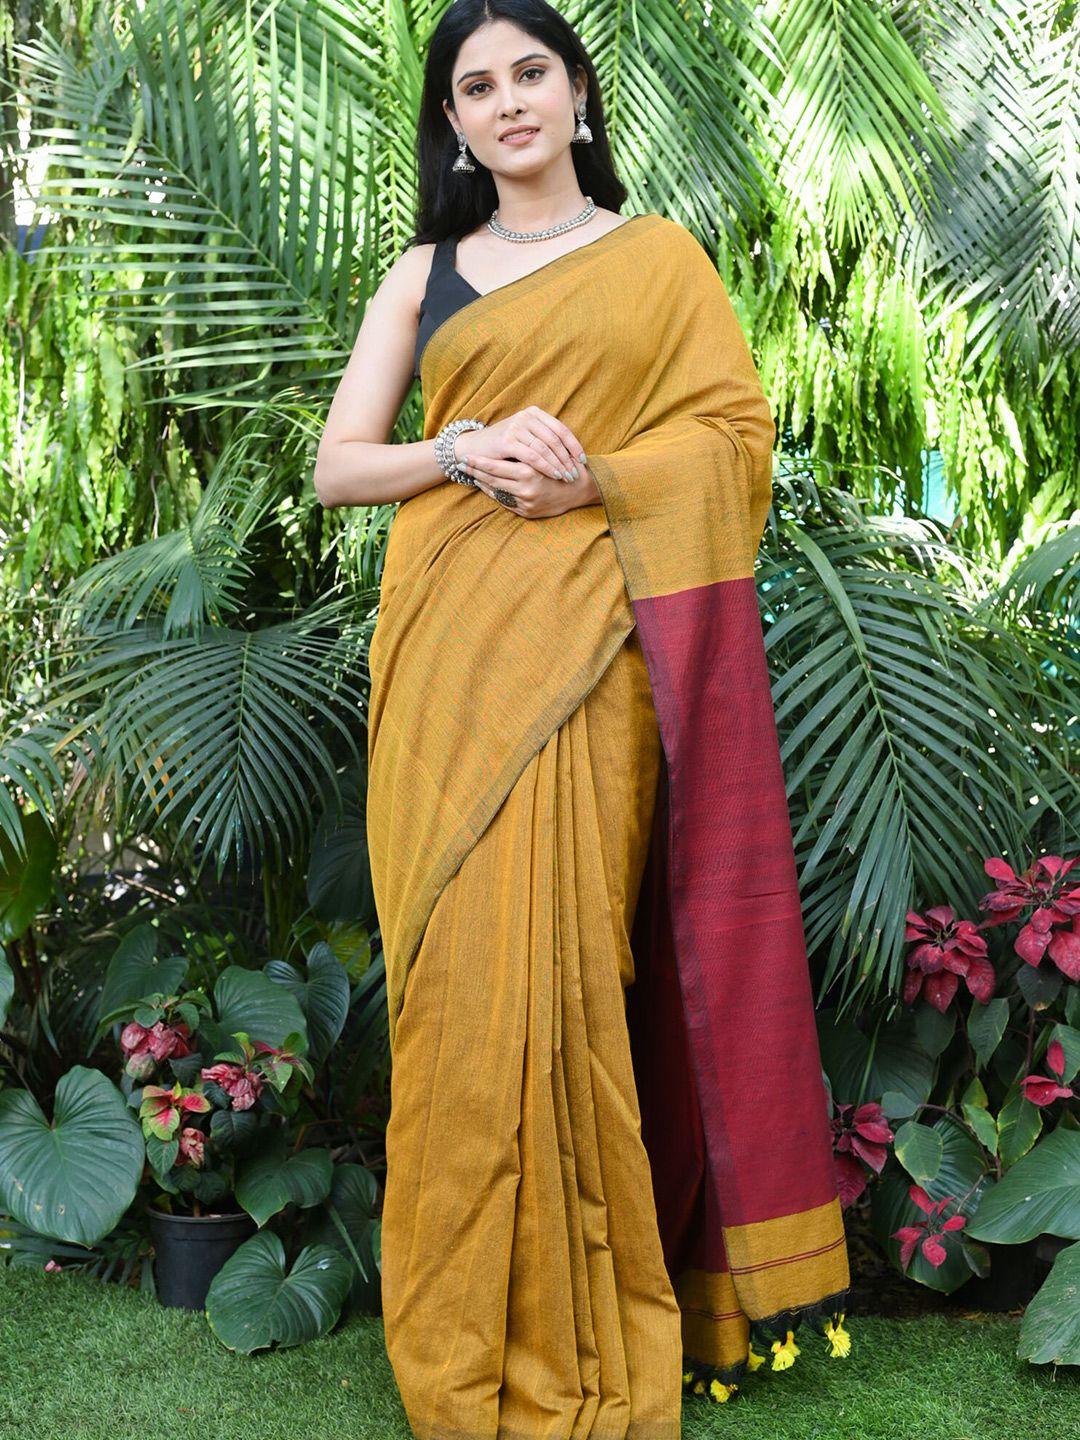 beatitude tassel detailed pure cotton handloom saree